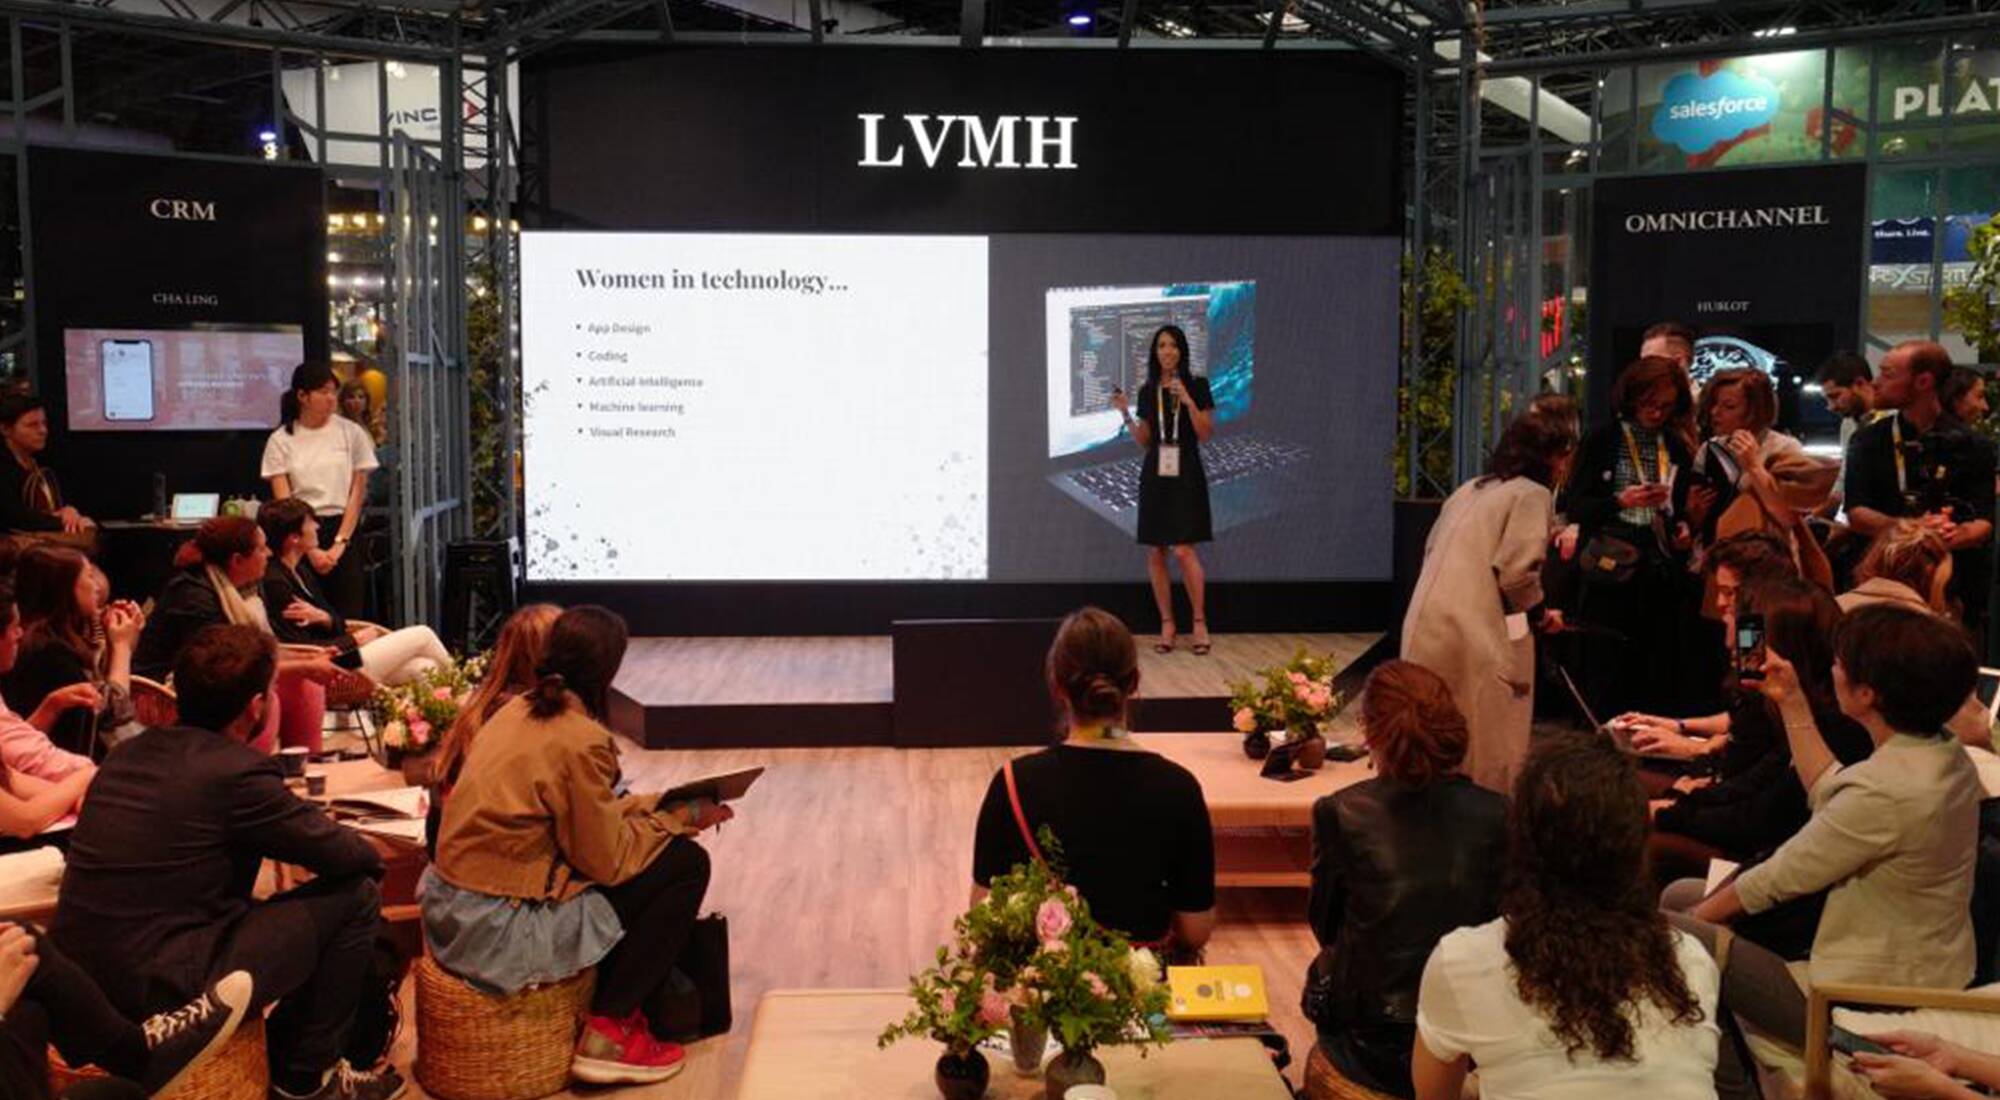 LVMH on X: First presentation by Gianluca De Santis, Chief